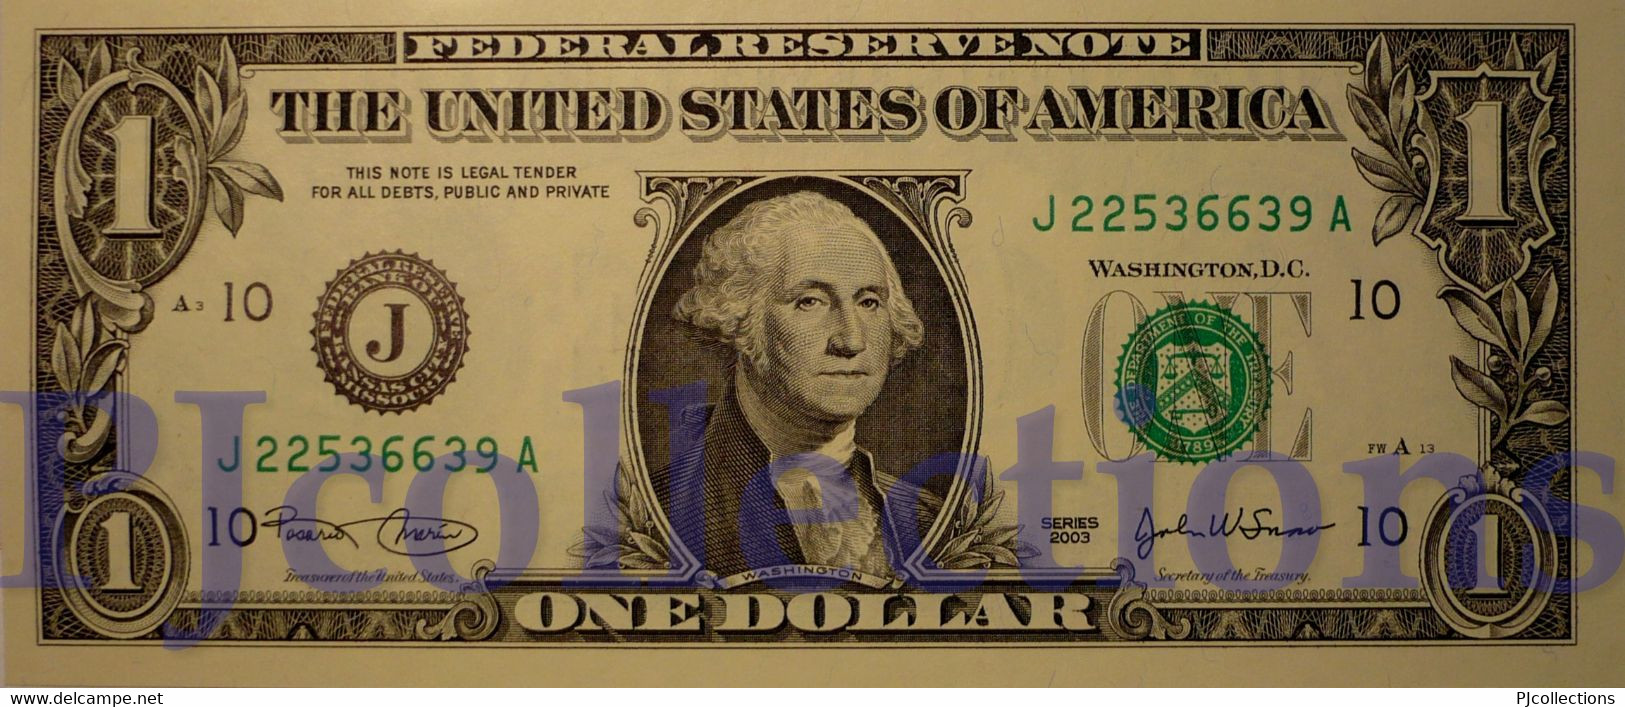 UNITED STATES OF AMERICA 1 DOLLAR 2003 PICK 515 PREFIX "J" UNC - Federal Reserve (1928-...)